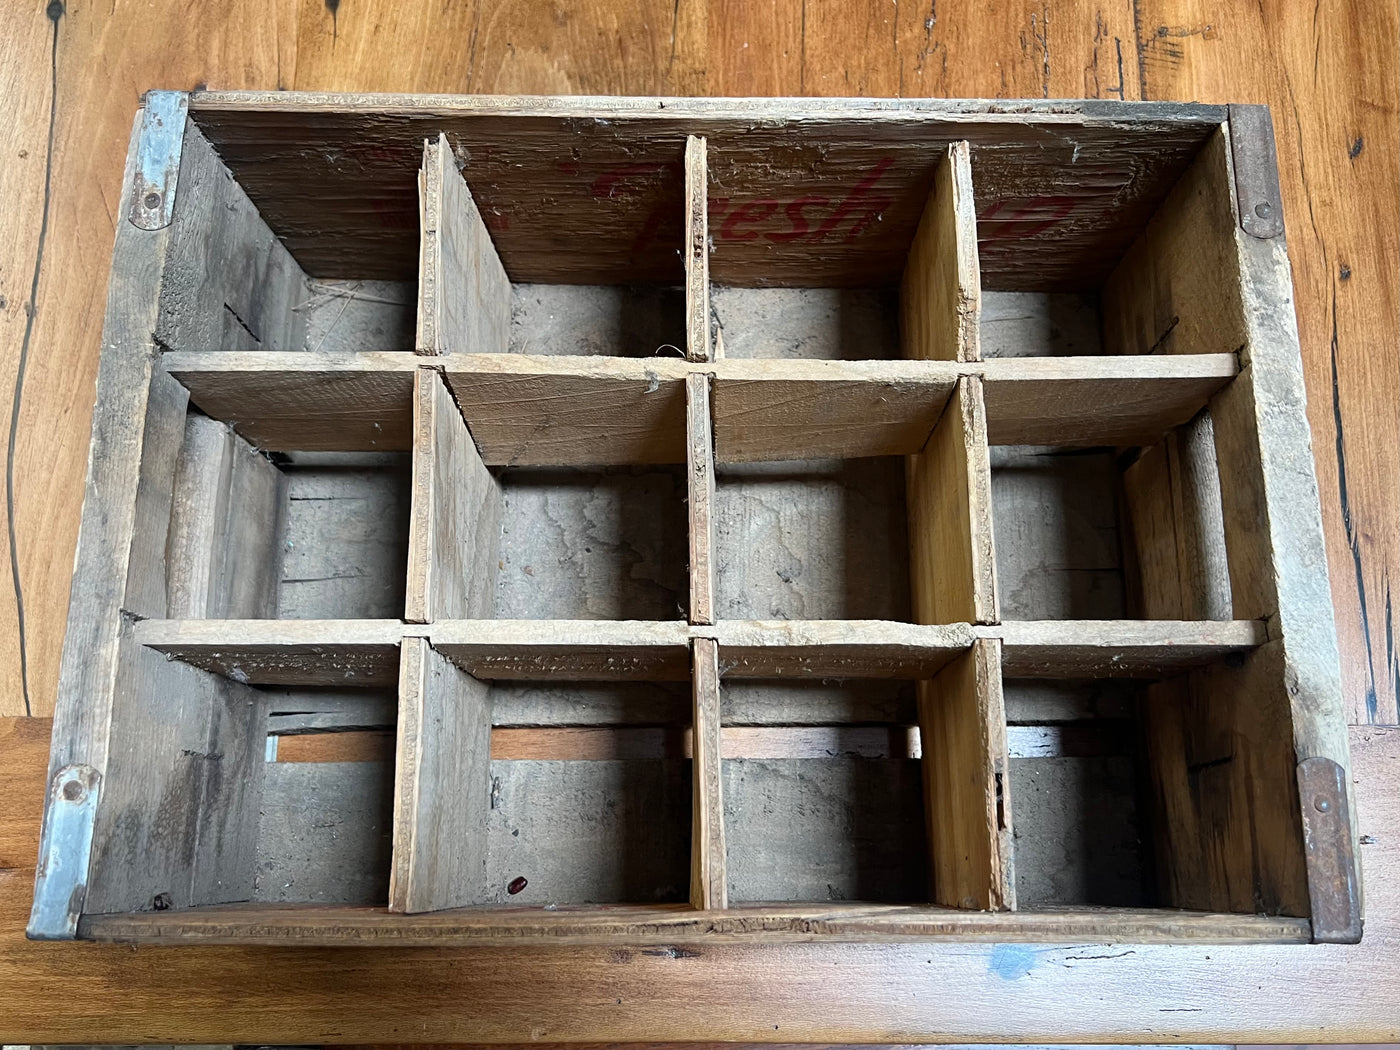 Vintage Seven-Up Crate